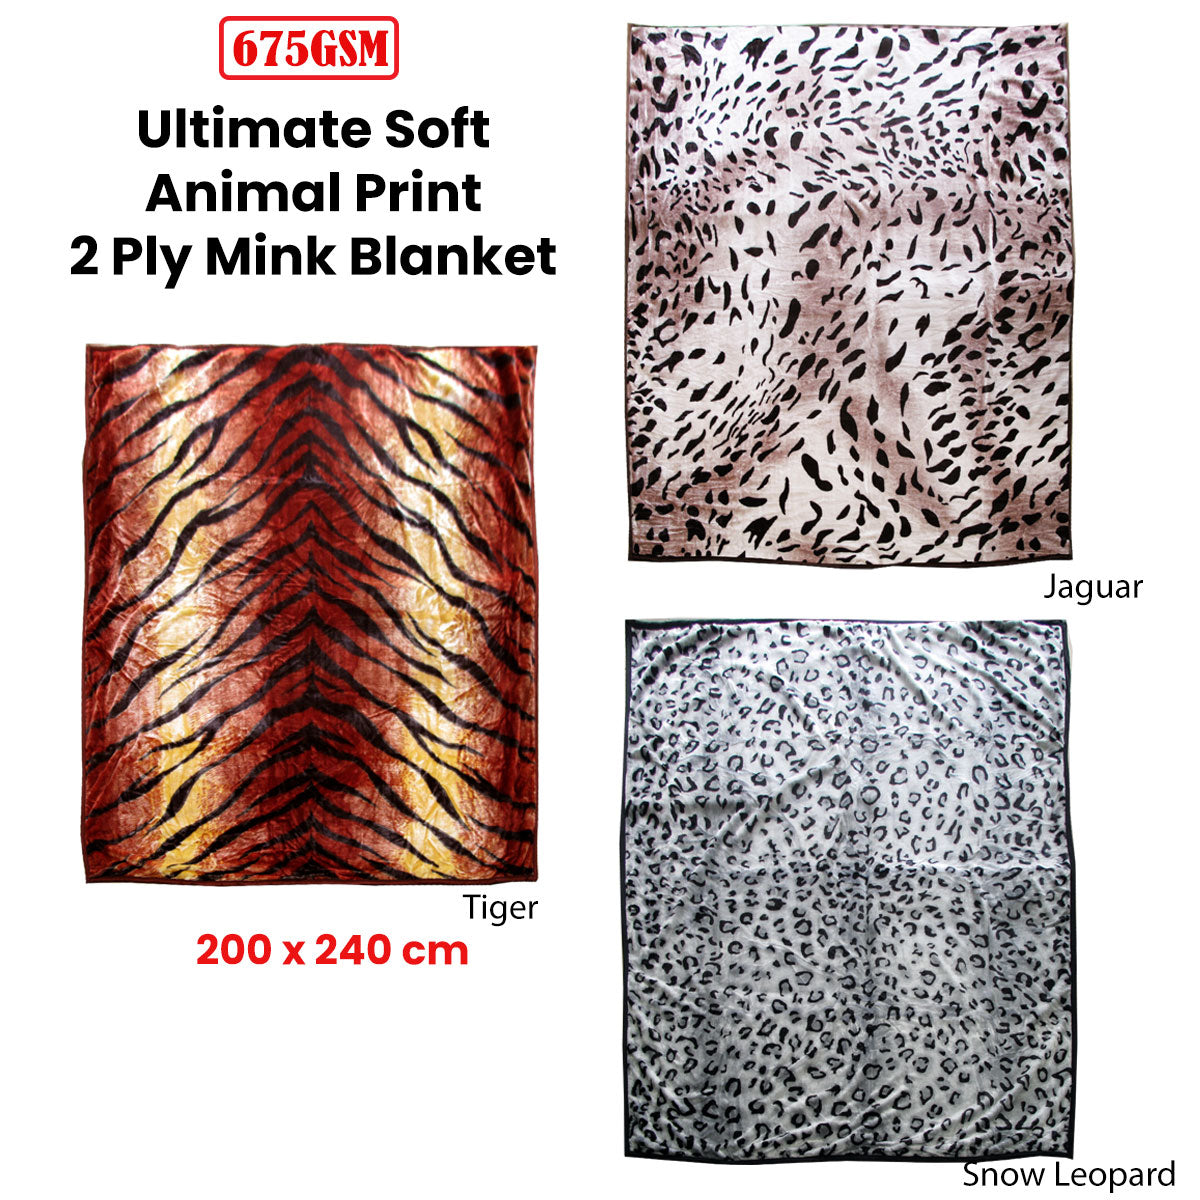 675gsm 2 Ply Animal Print Faux Mink Blanket Queen 200x240 cm Tiger - Newstart Furniture